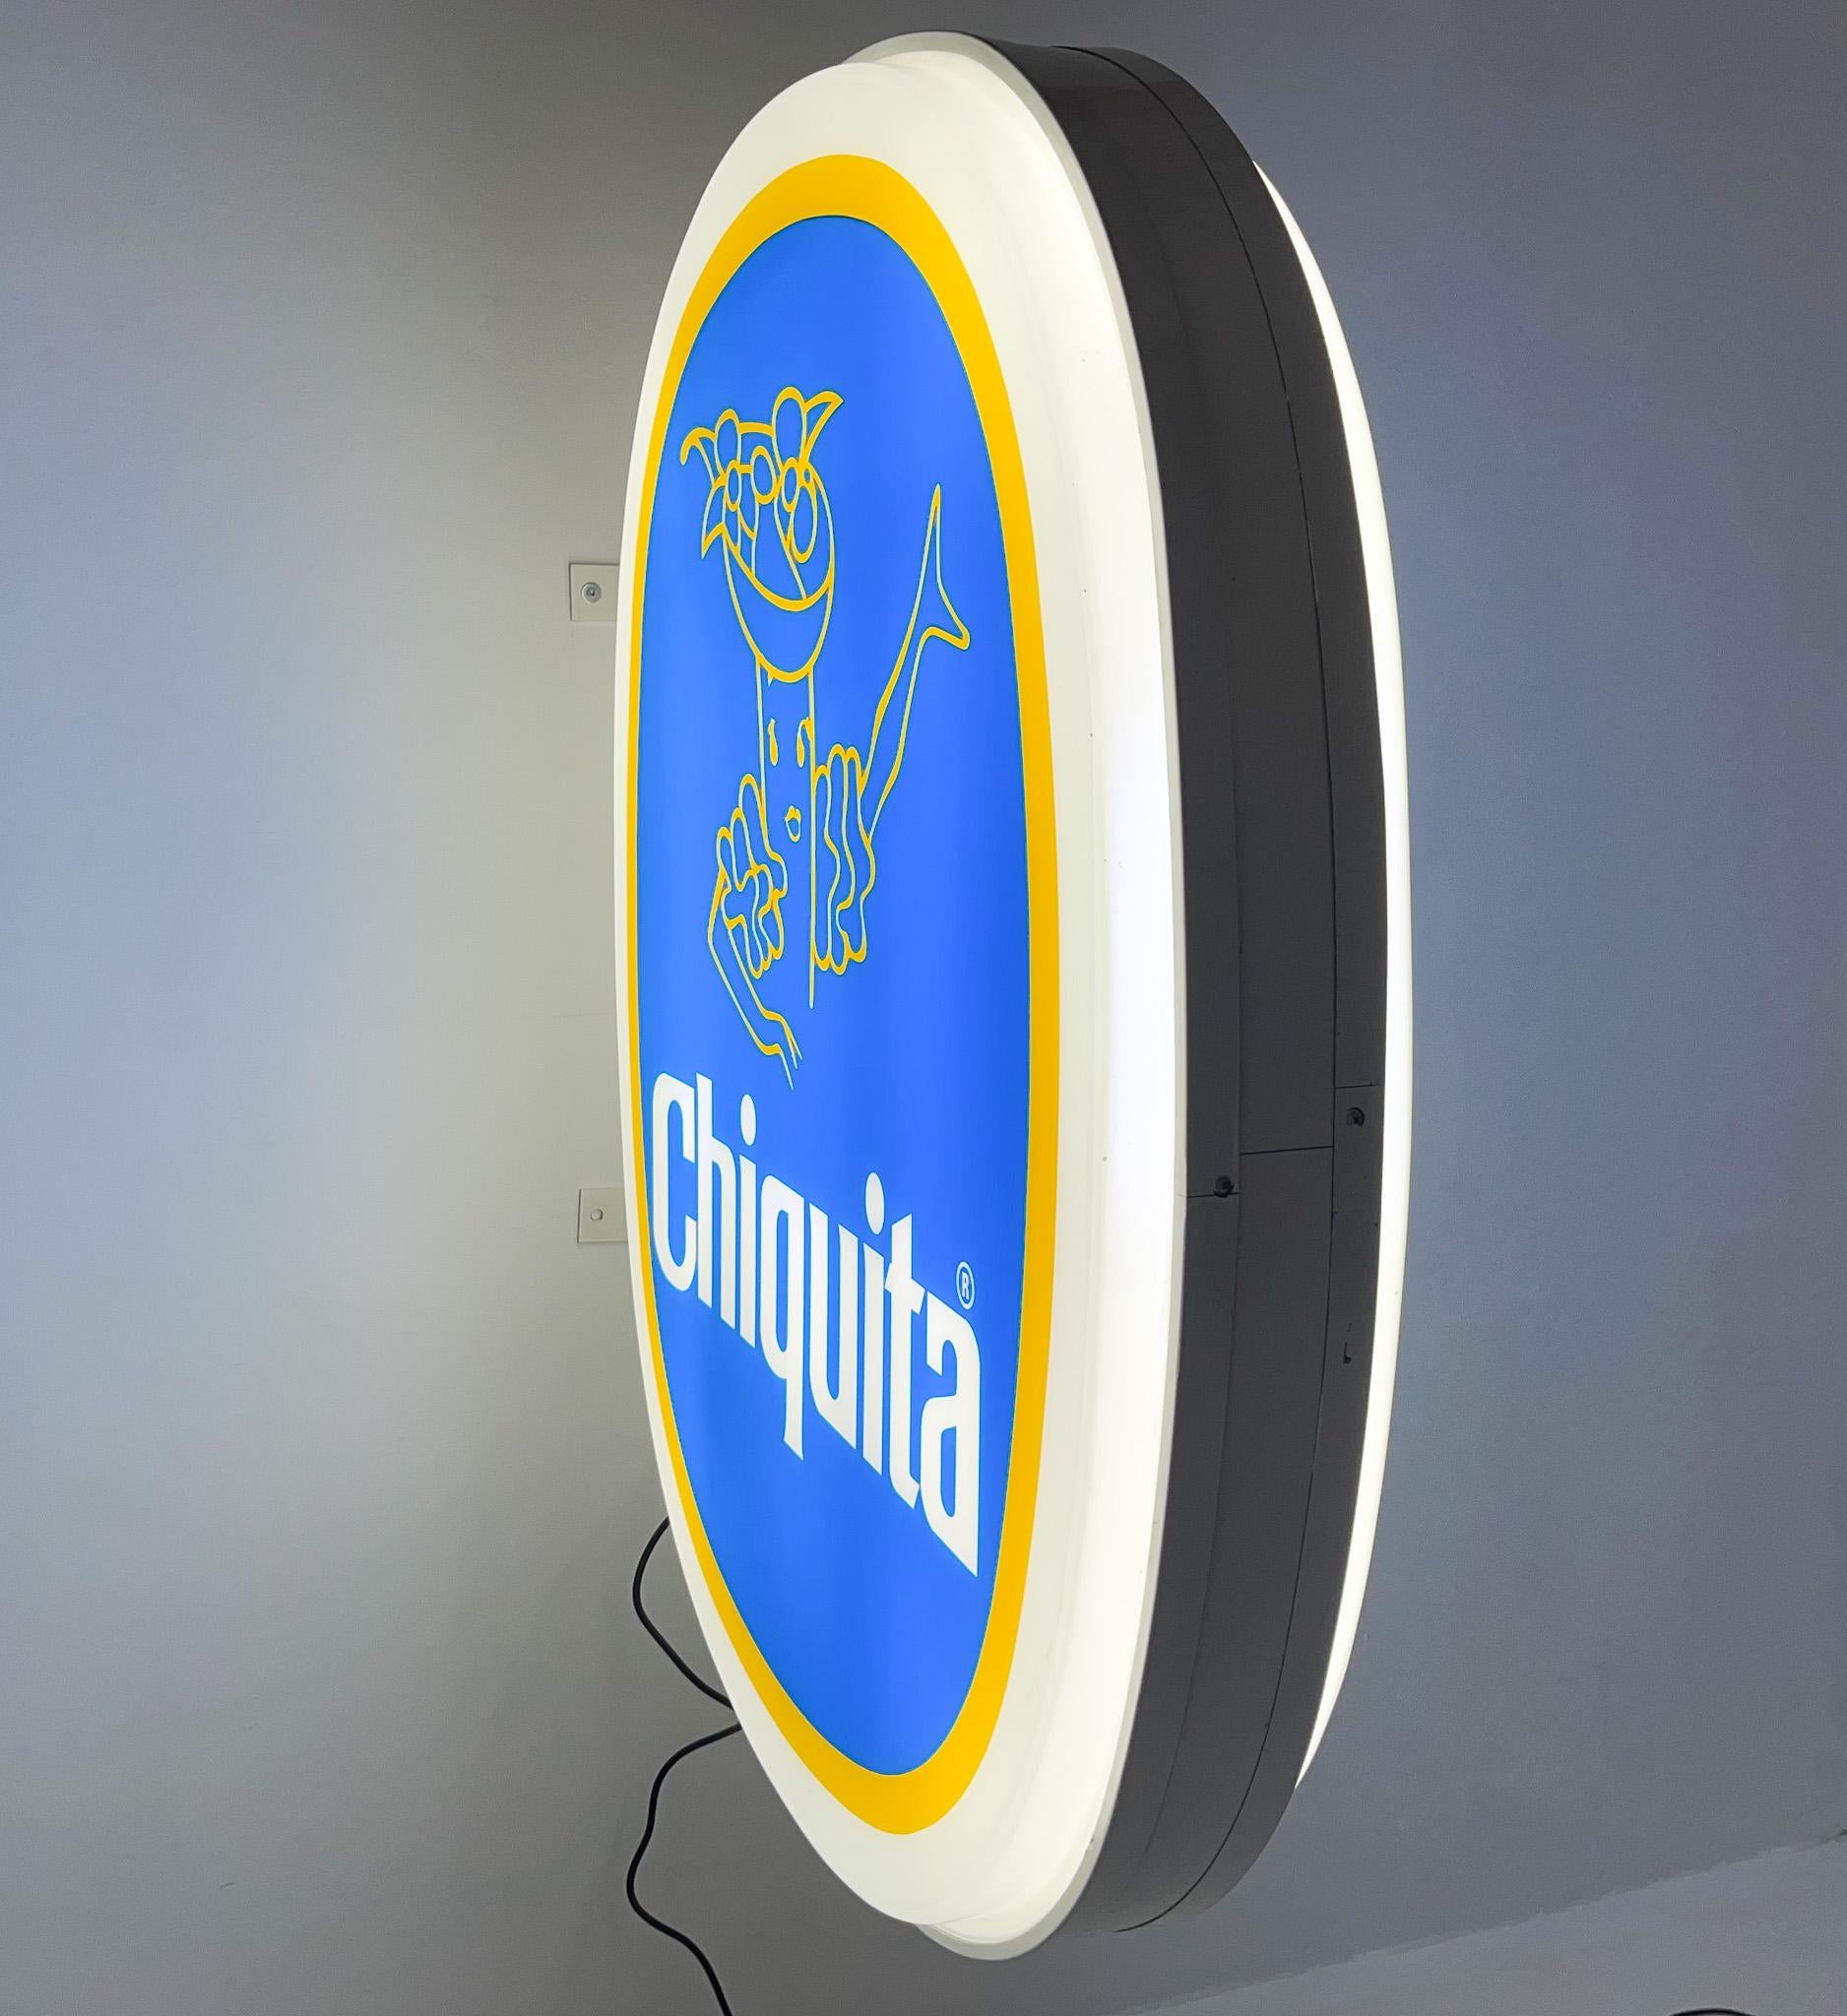 chiquita banana logo history